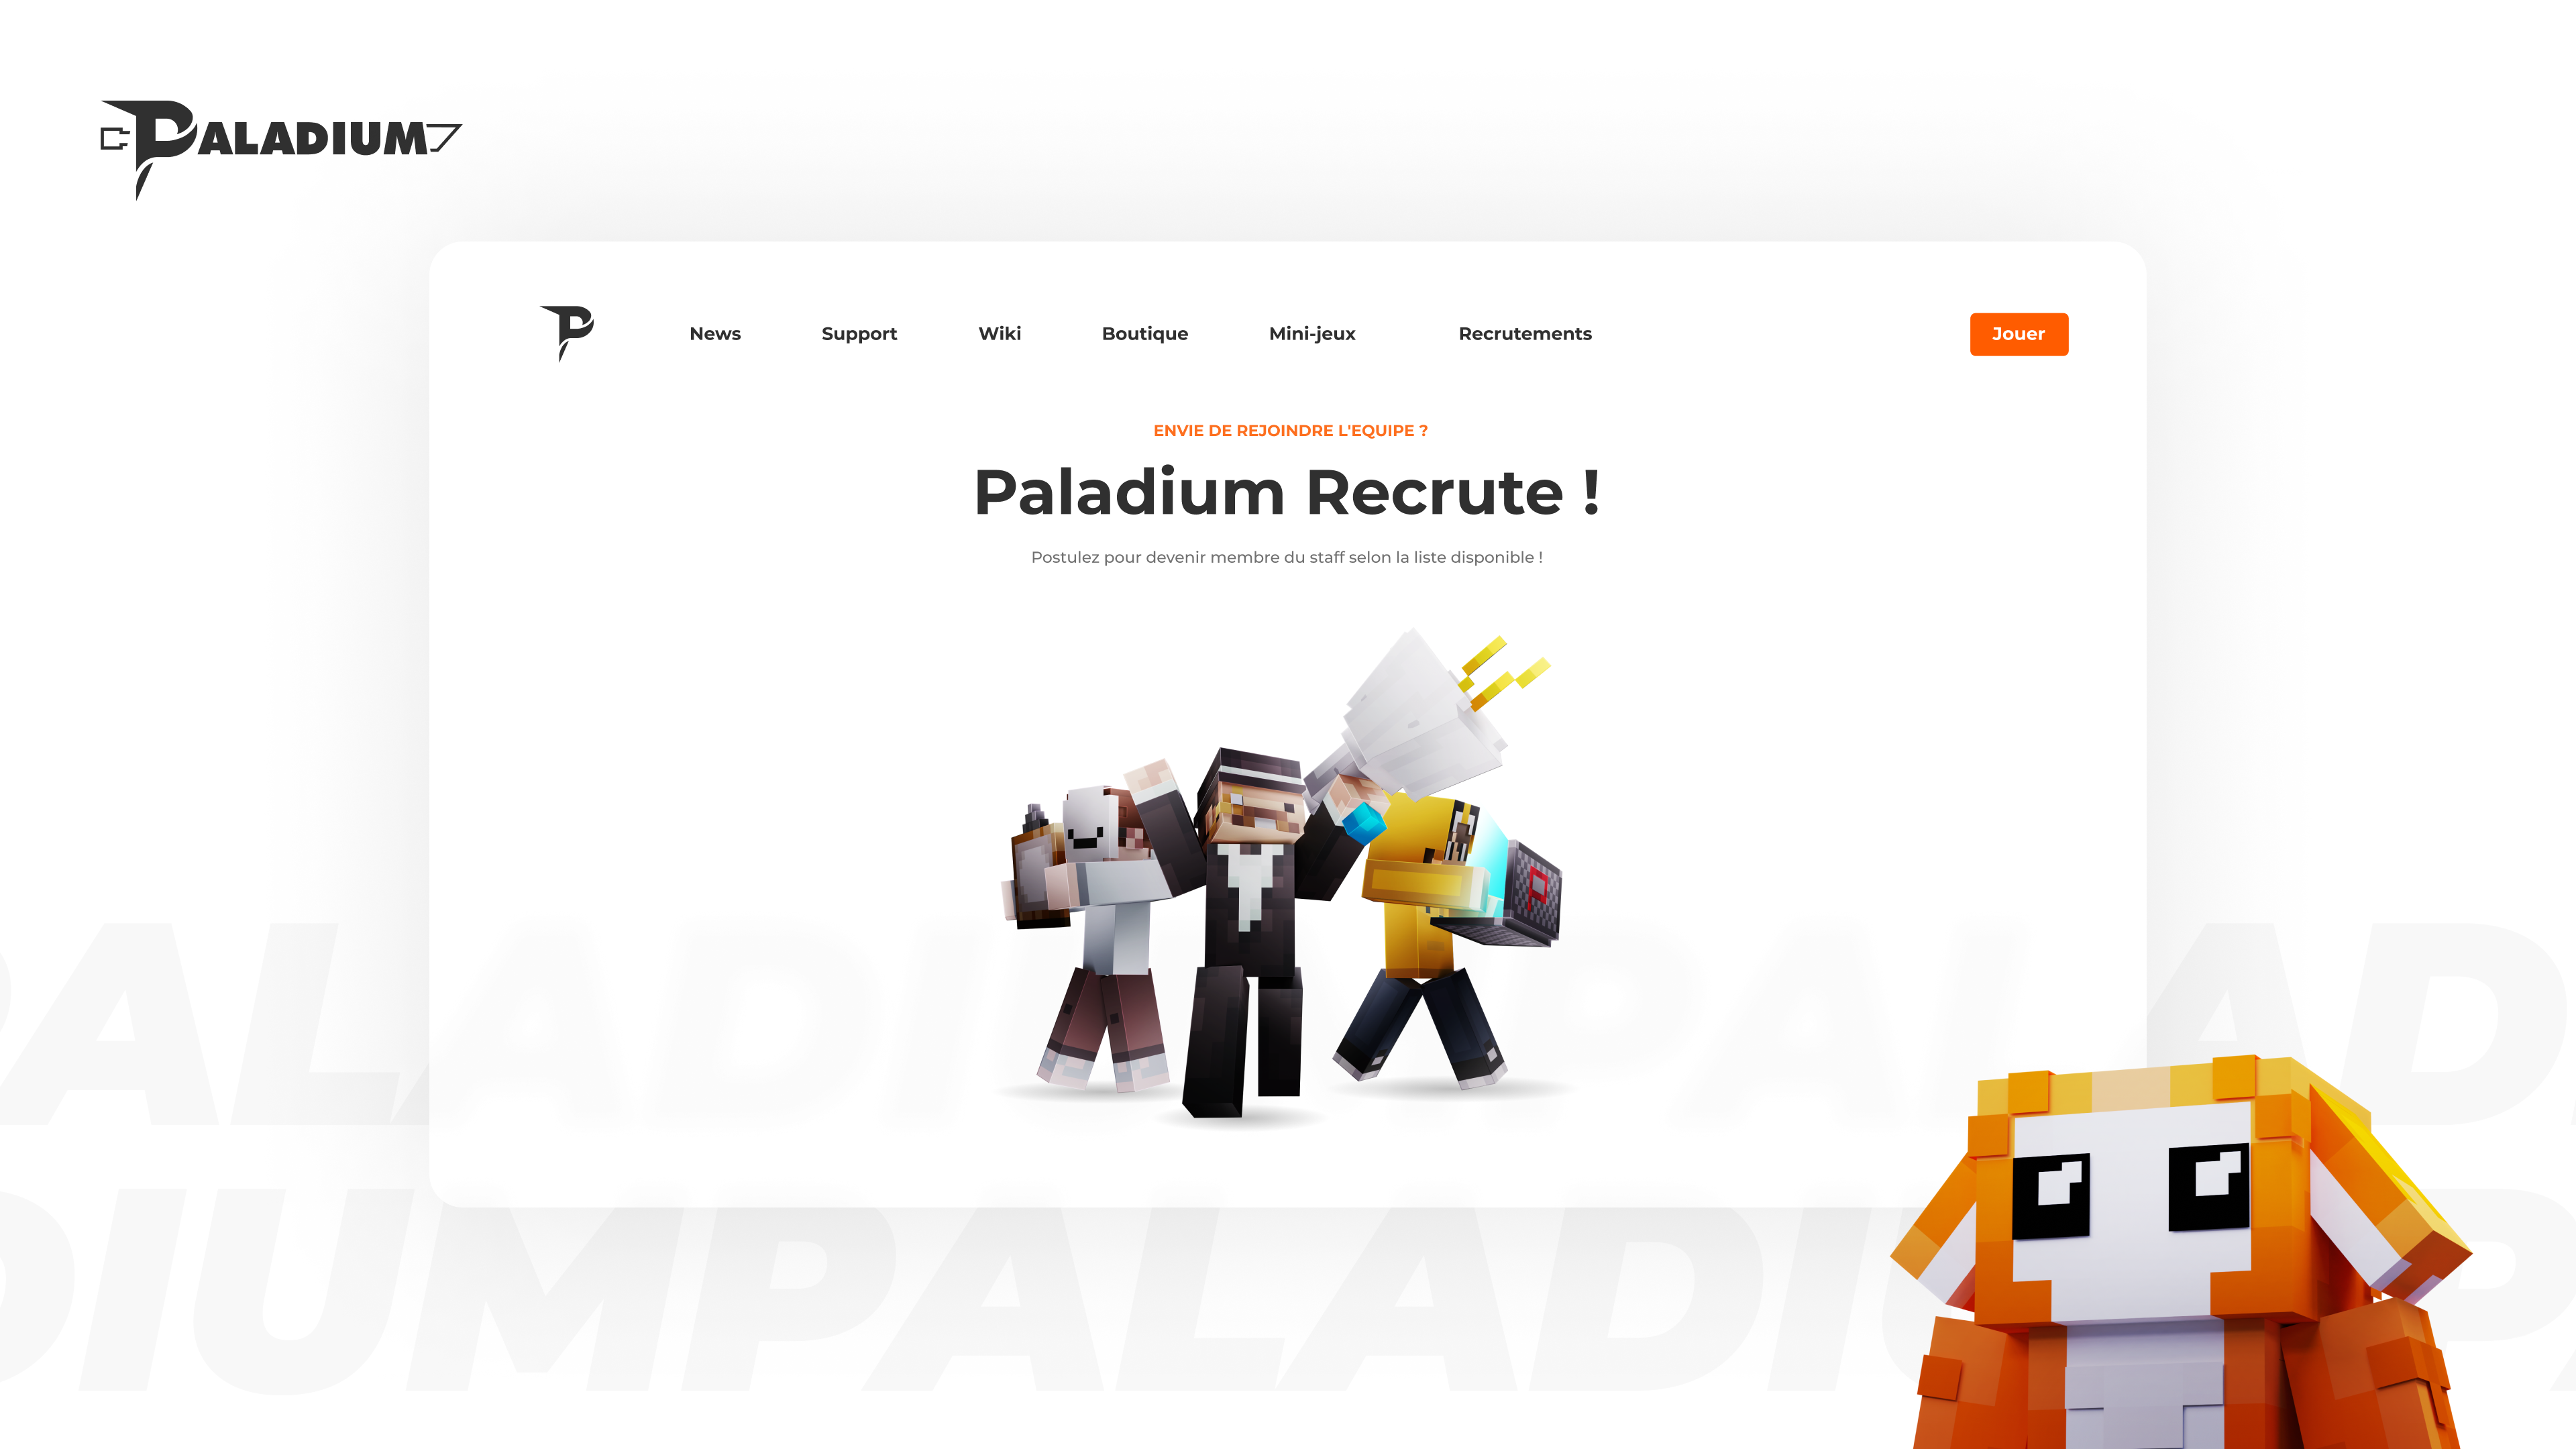 Paladium careers website.